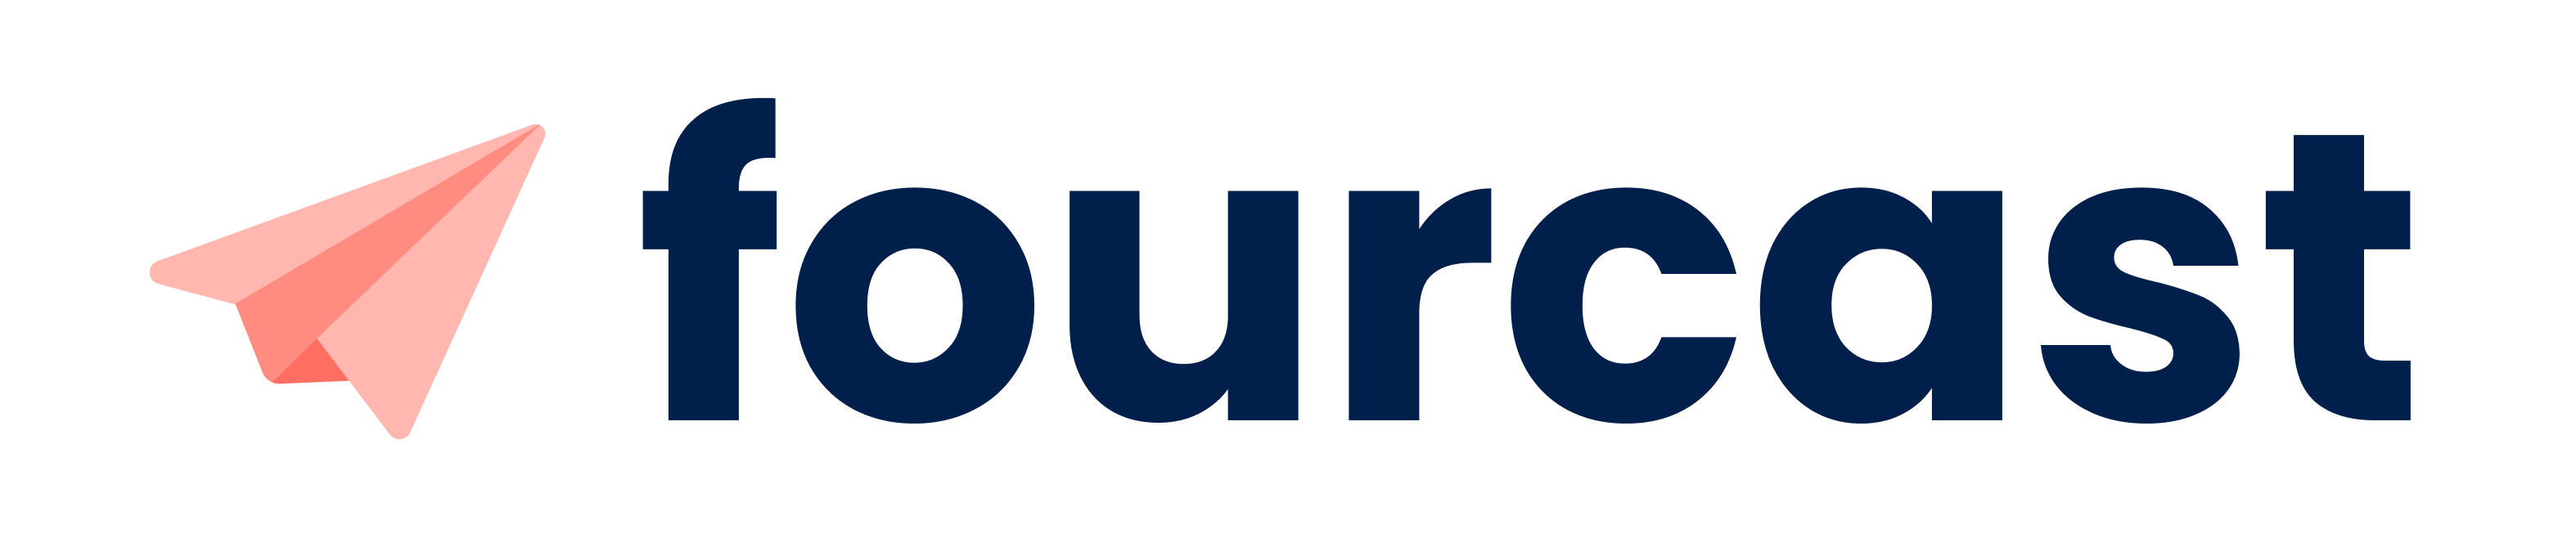 Logo van Partner Fourcast